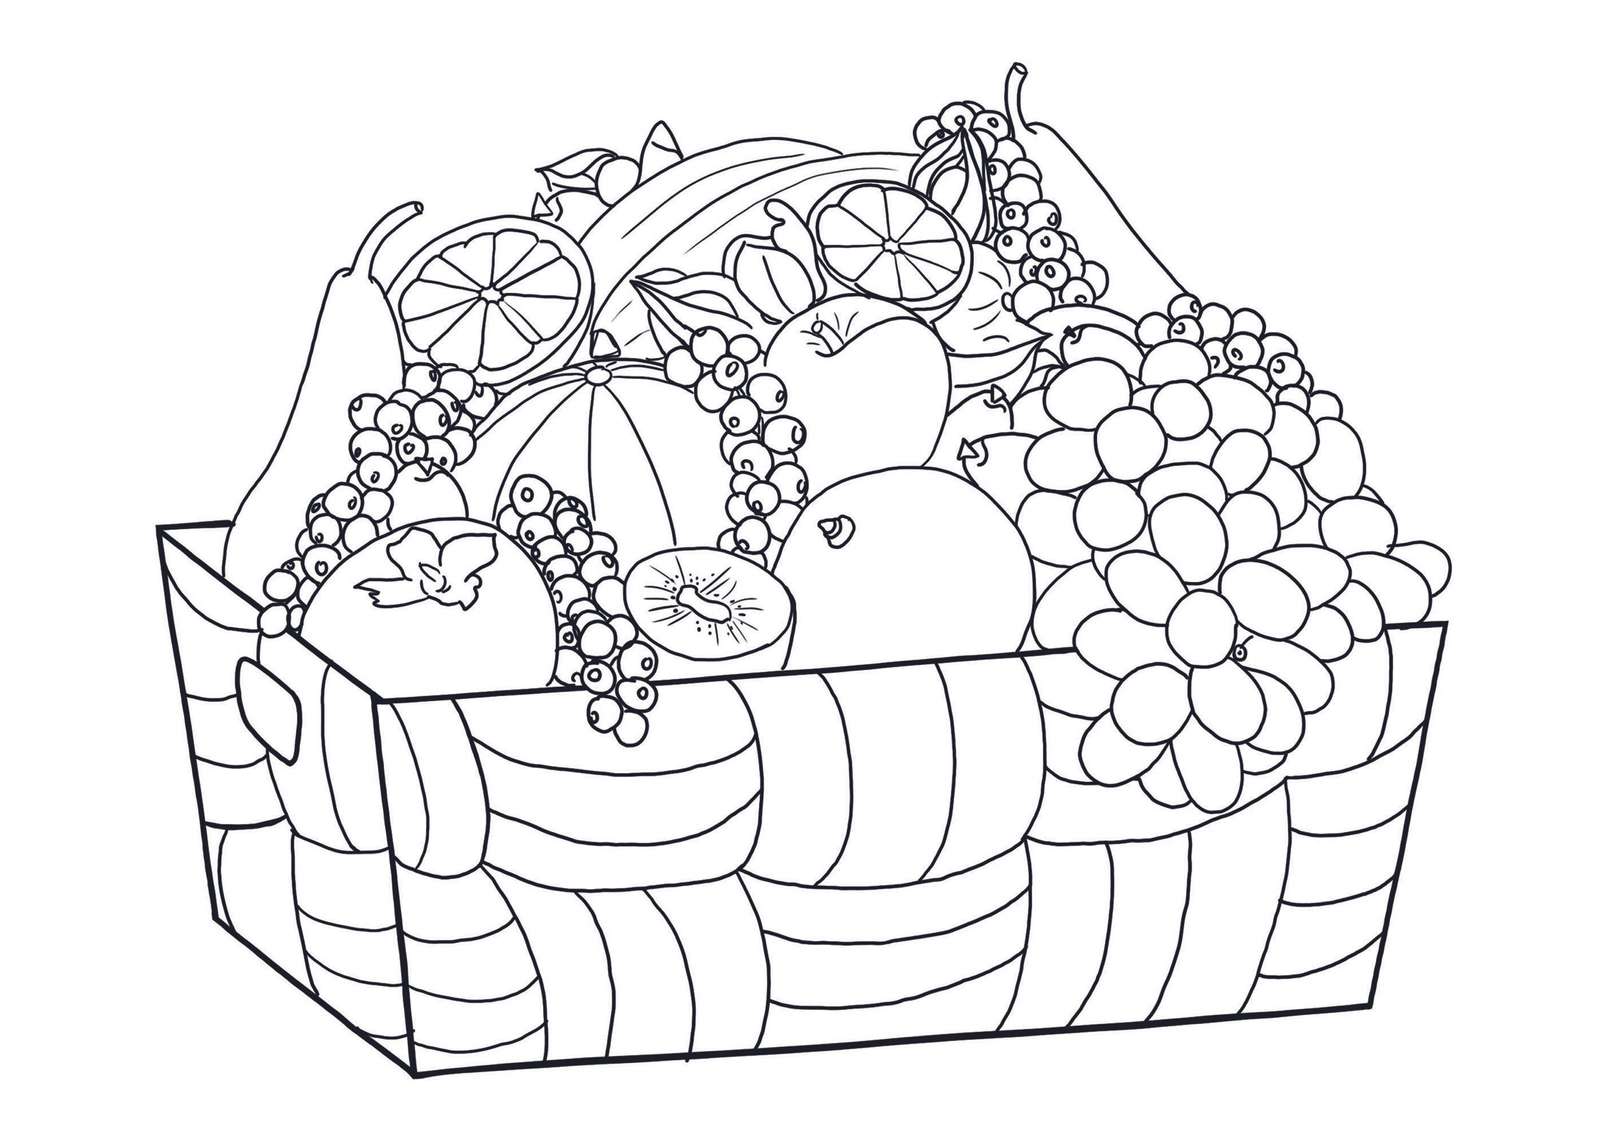 Buah-buahan puzzle online ze zdjęcia